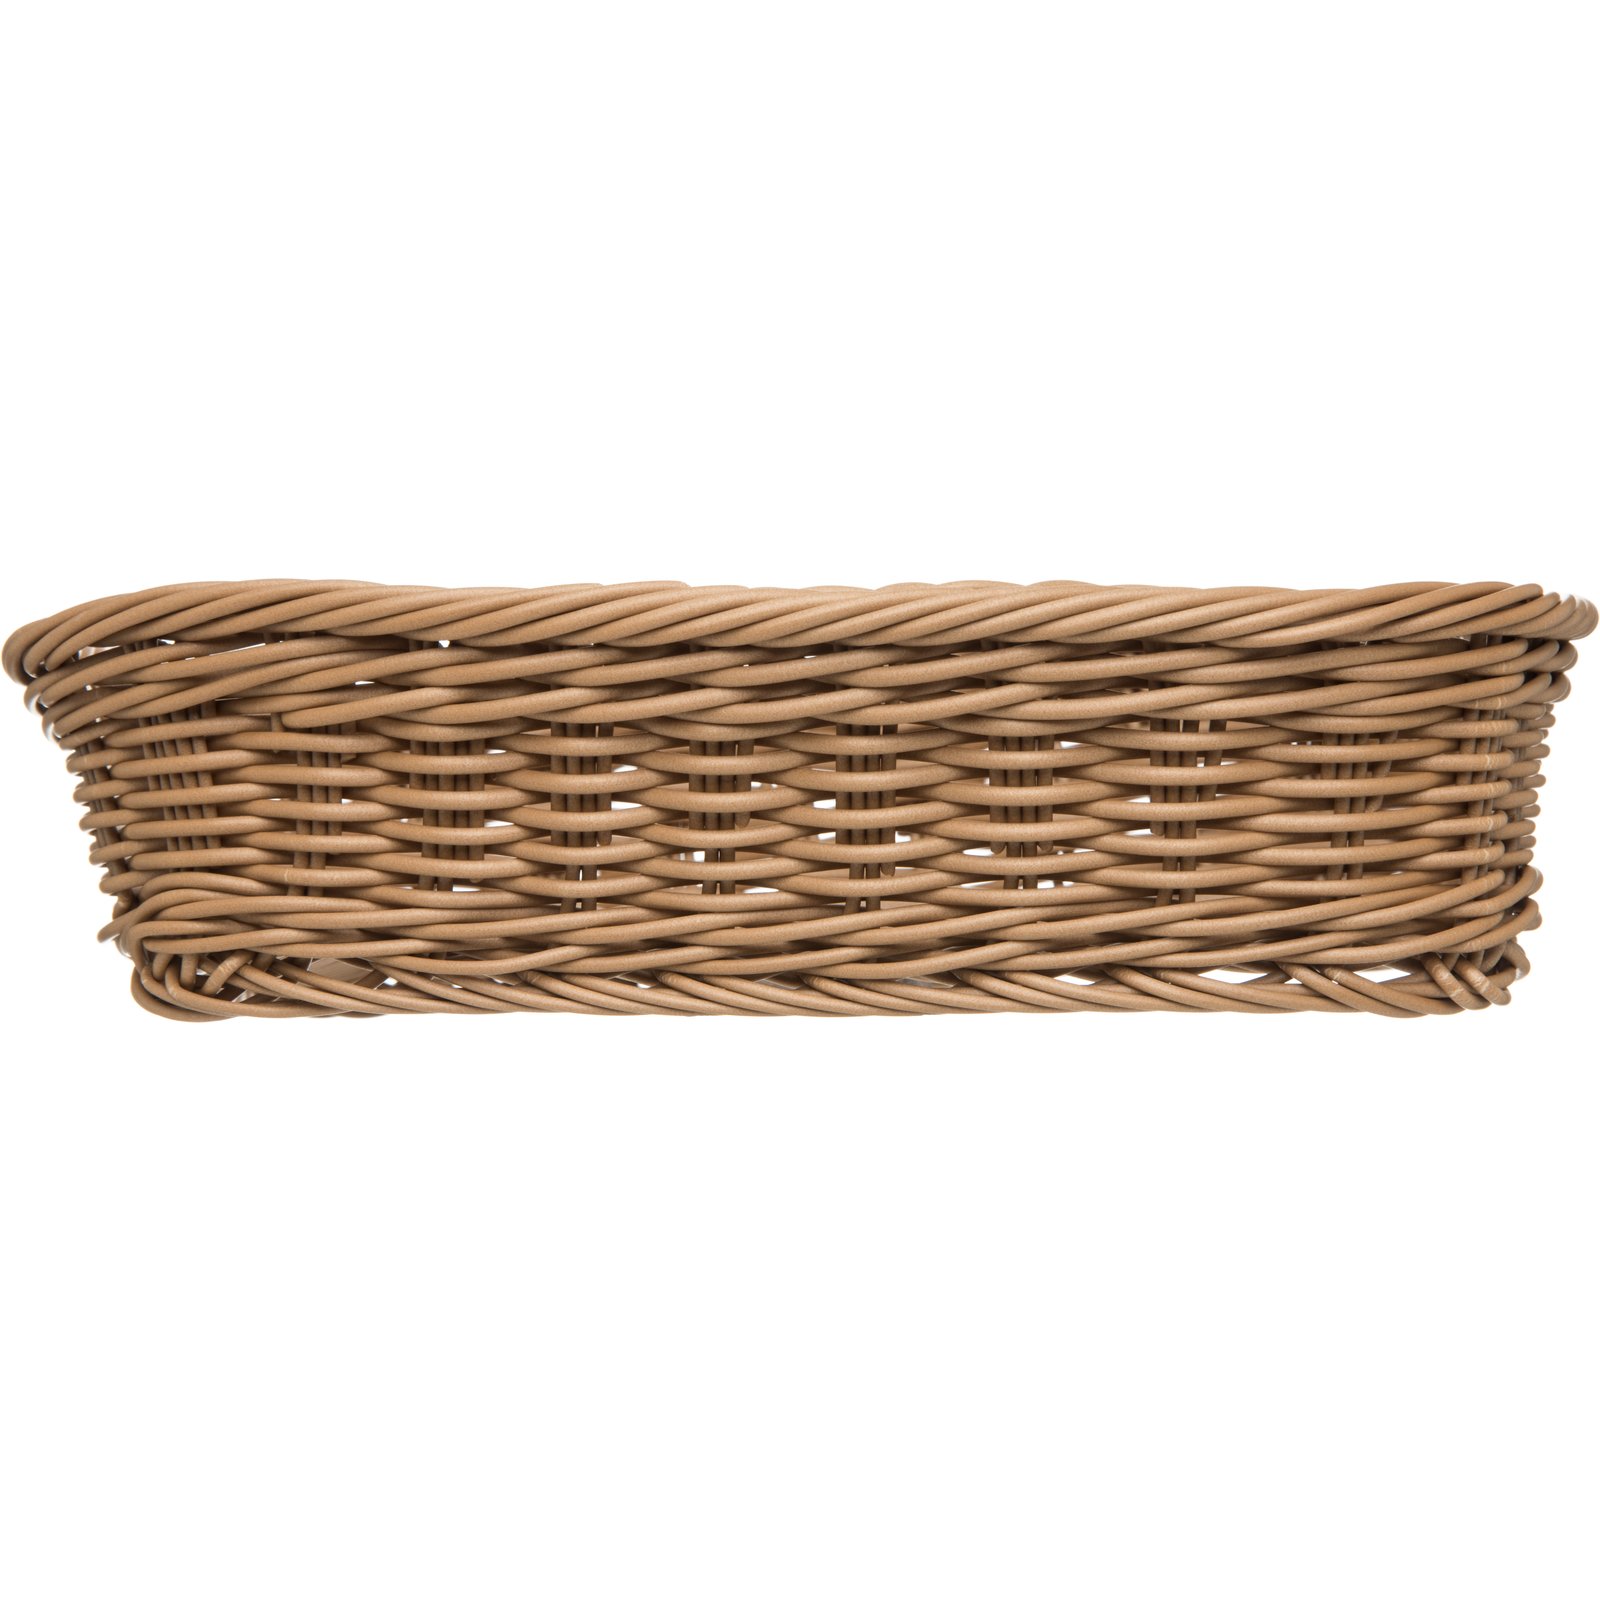 655225 - Woven Baskets Rectangular Basket 11.5" - Tan ...
